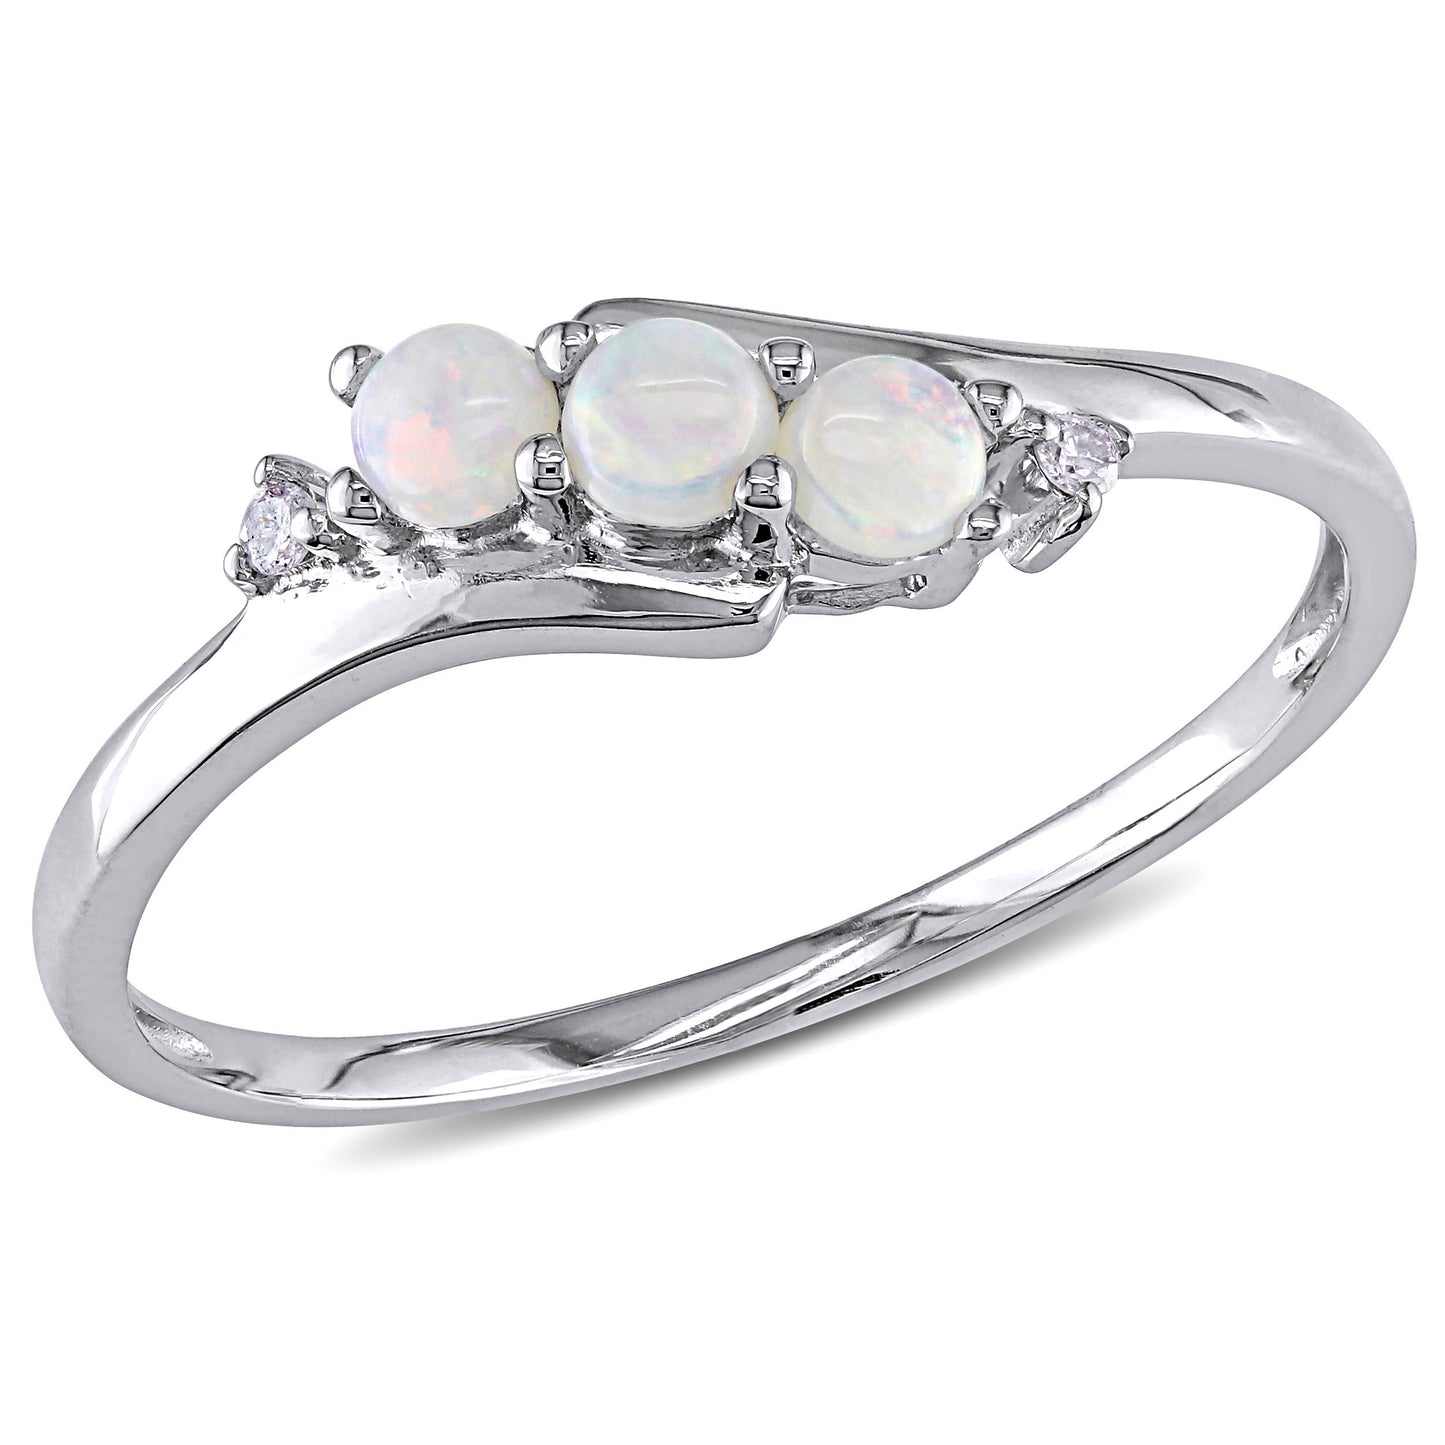 3-Stone Opal & Diamond Ring in 10k White Gold